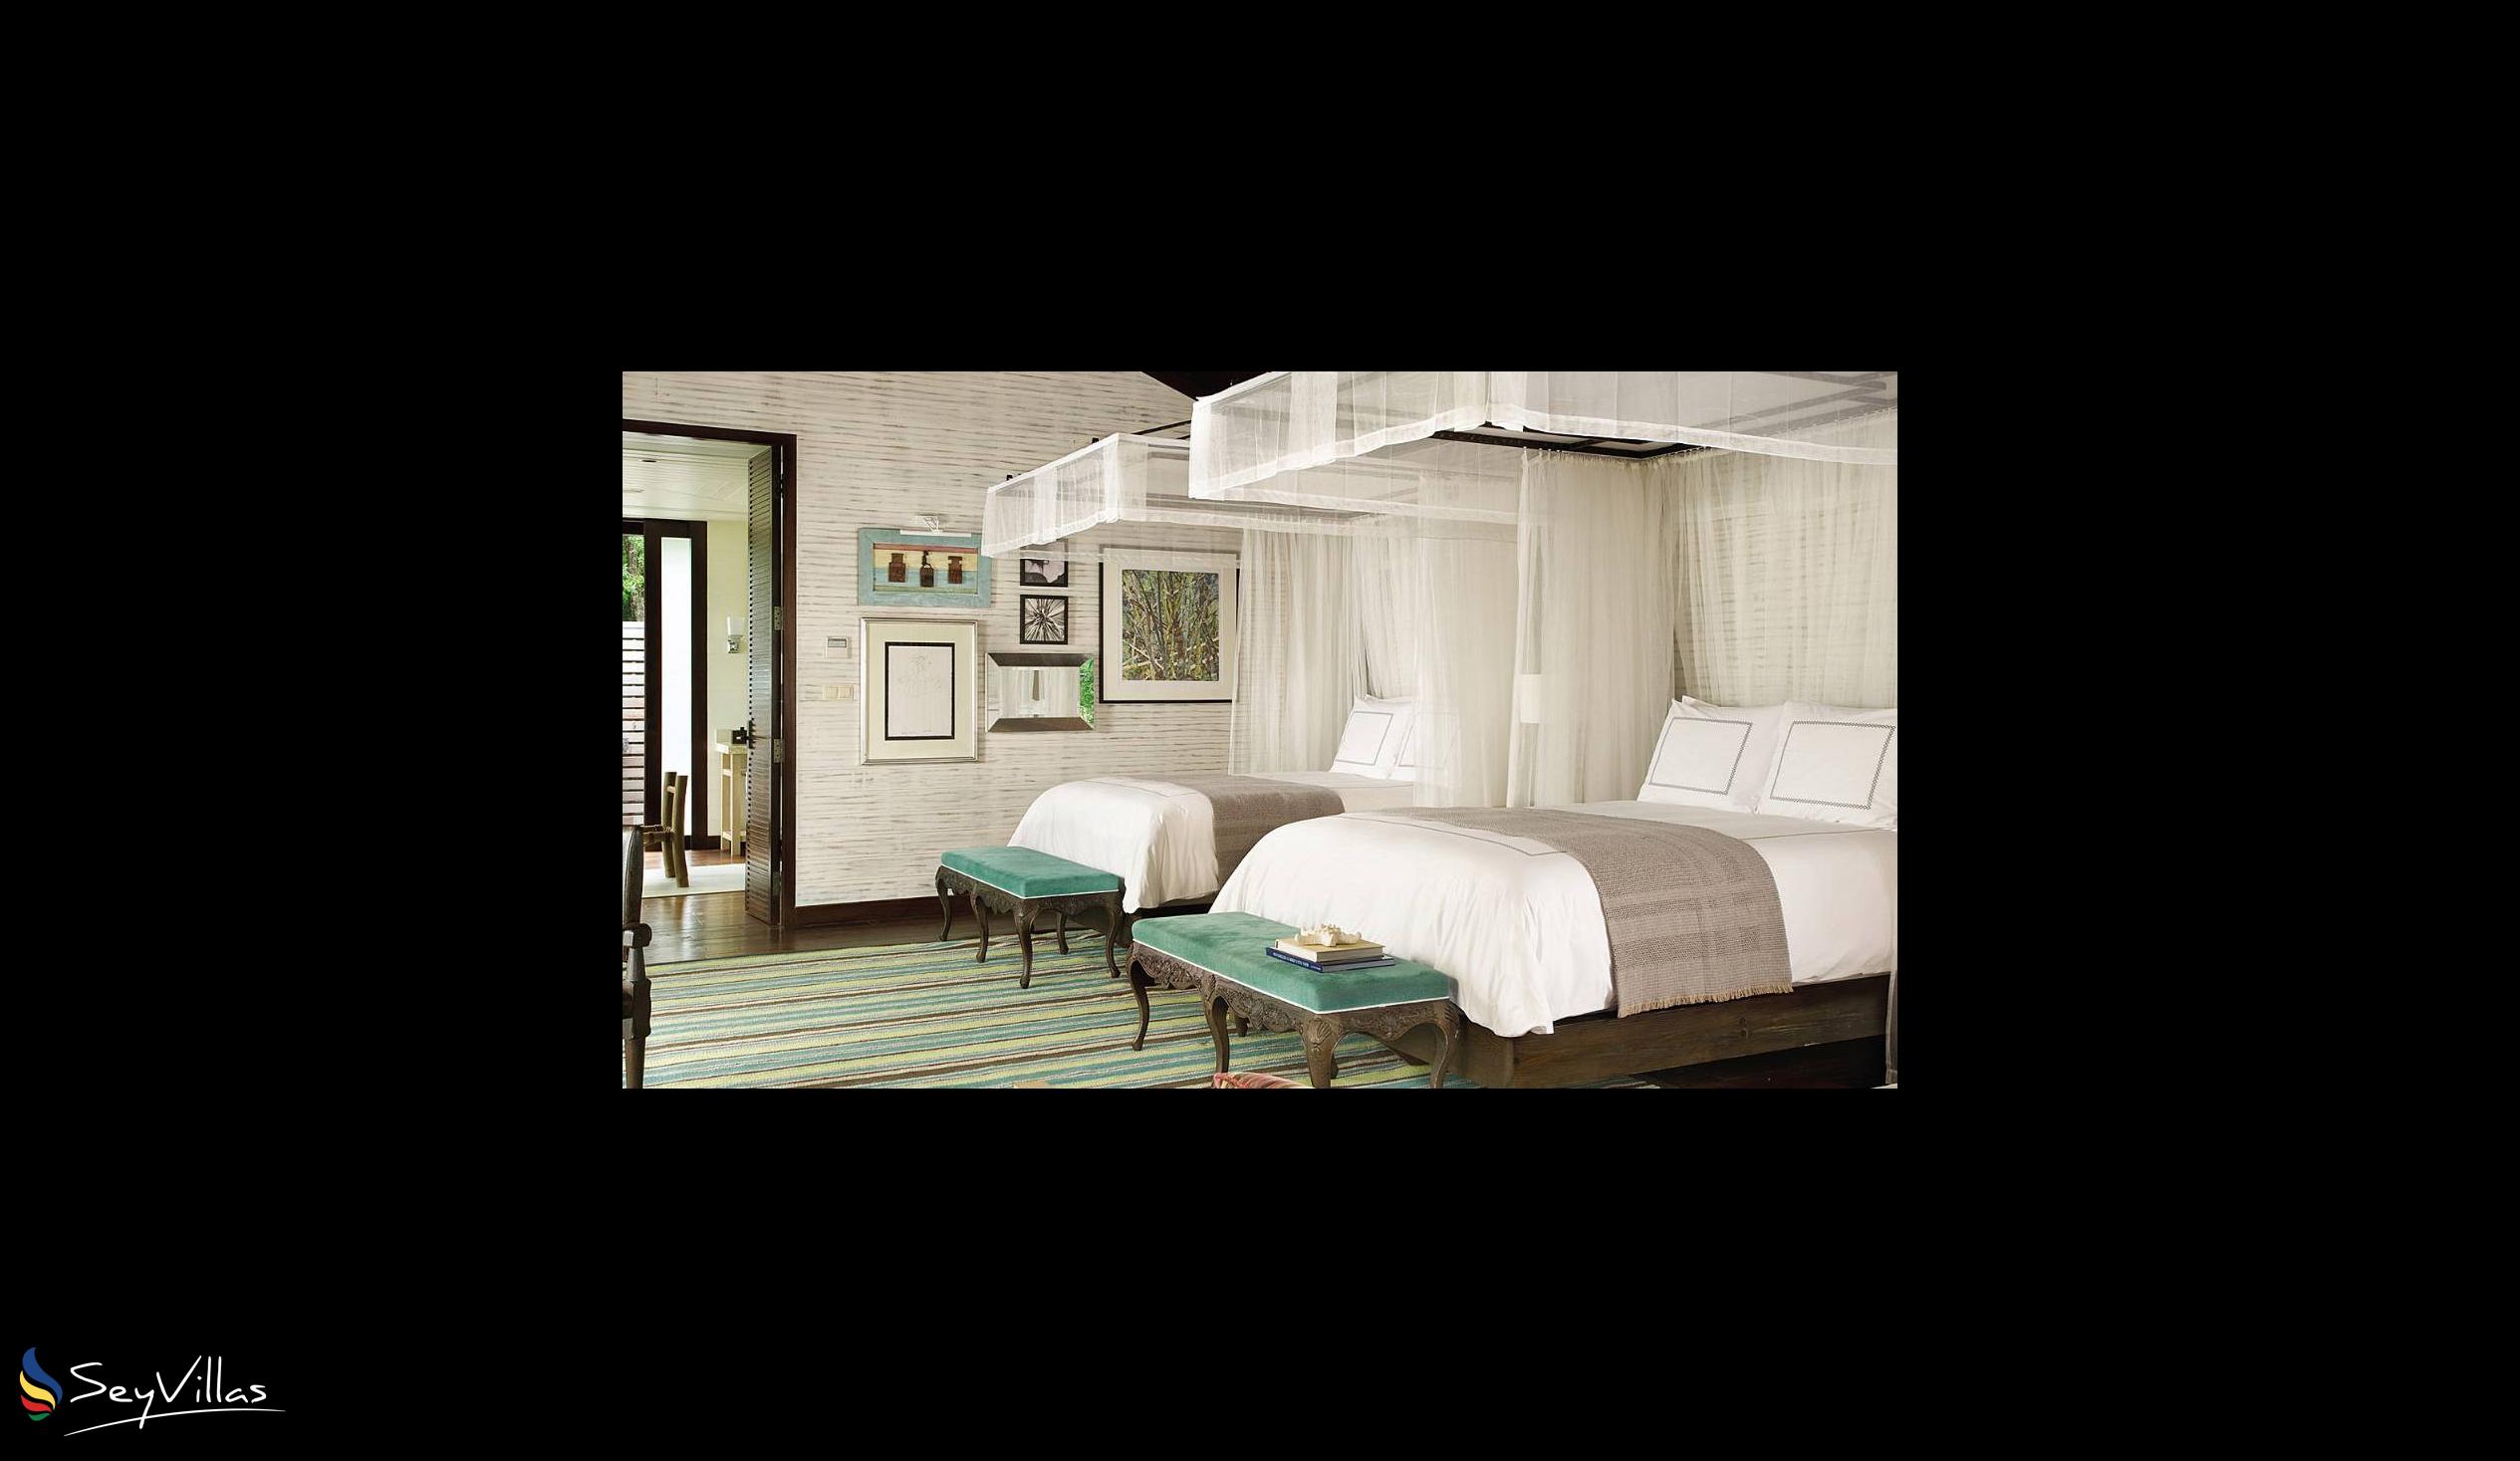 Photo 47: Four Seasons Resort - 2-Bedroom Ocean View Suite - Mahé (Seychelles)